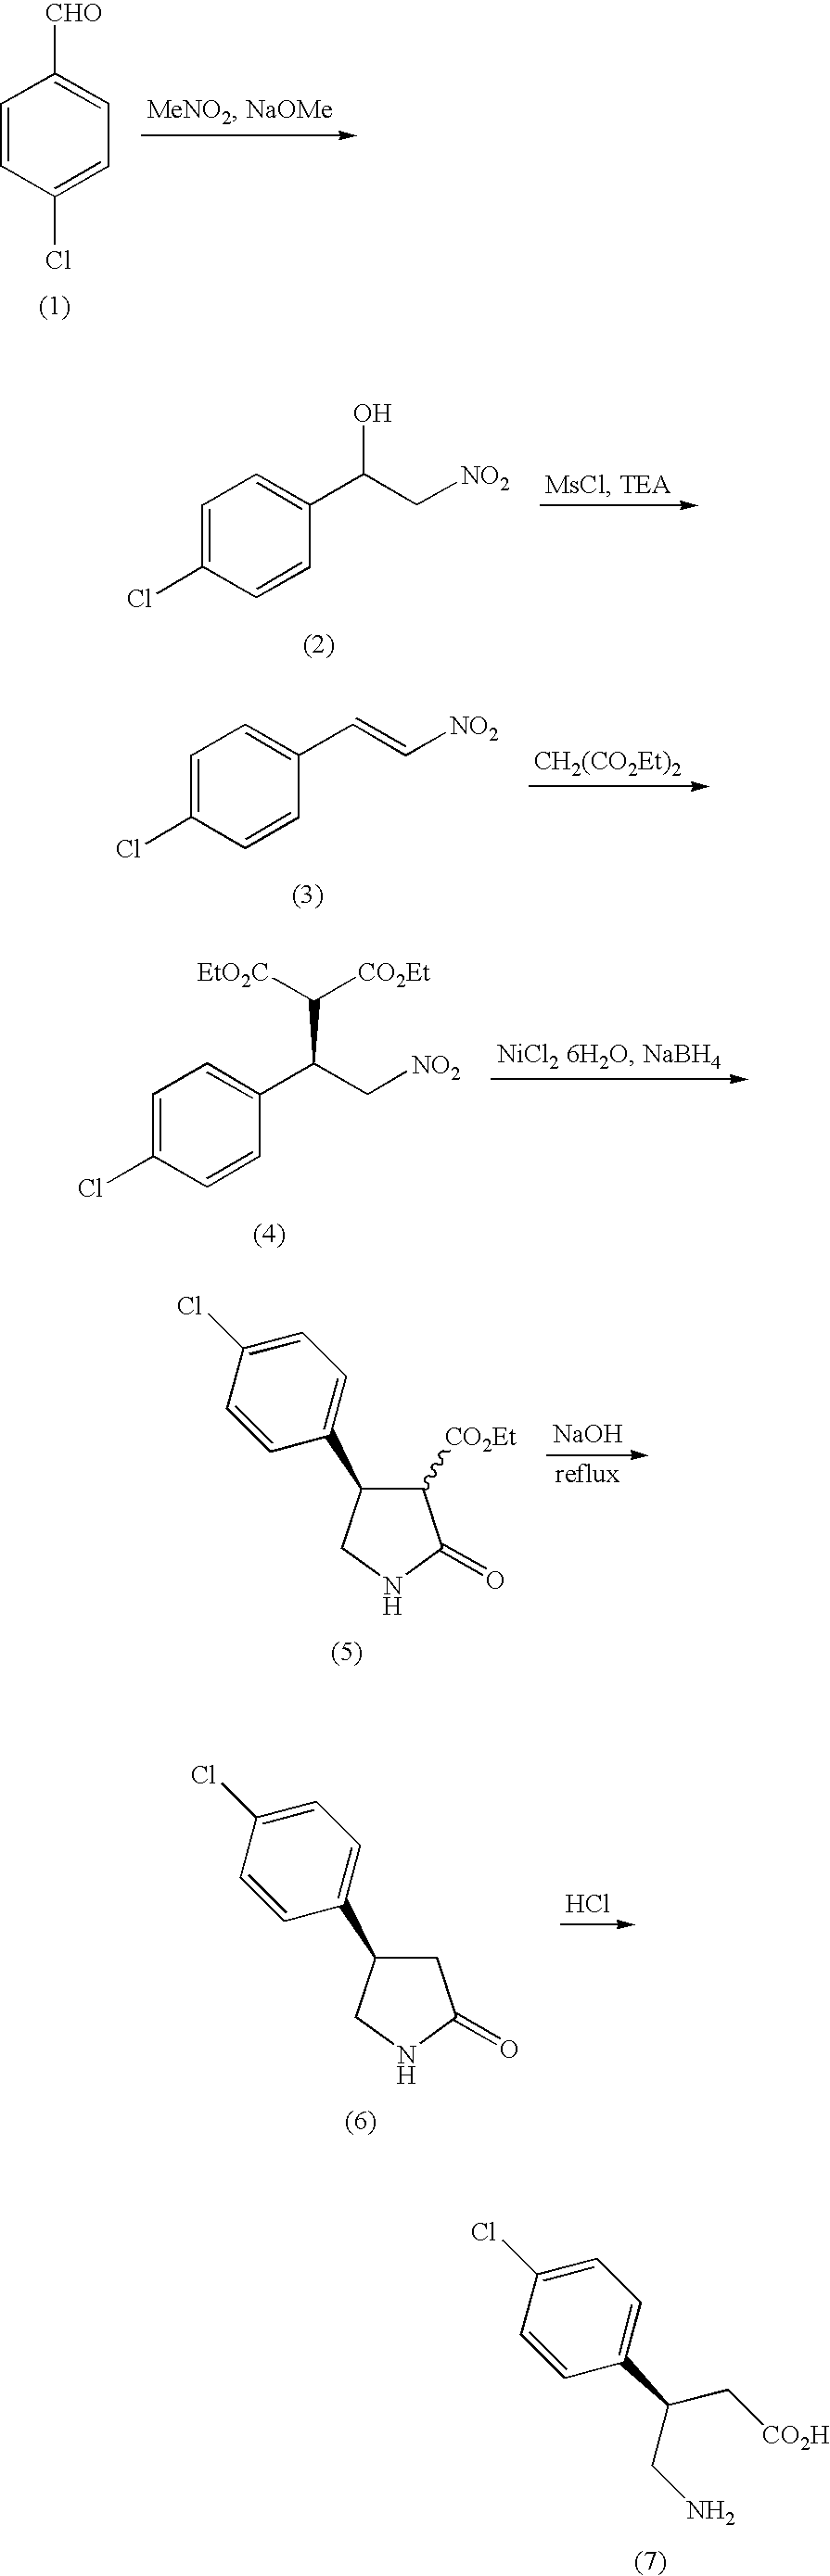 Method of producing optically active 4-amino-3-substituted phenylbutanoic acid